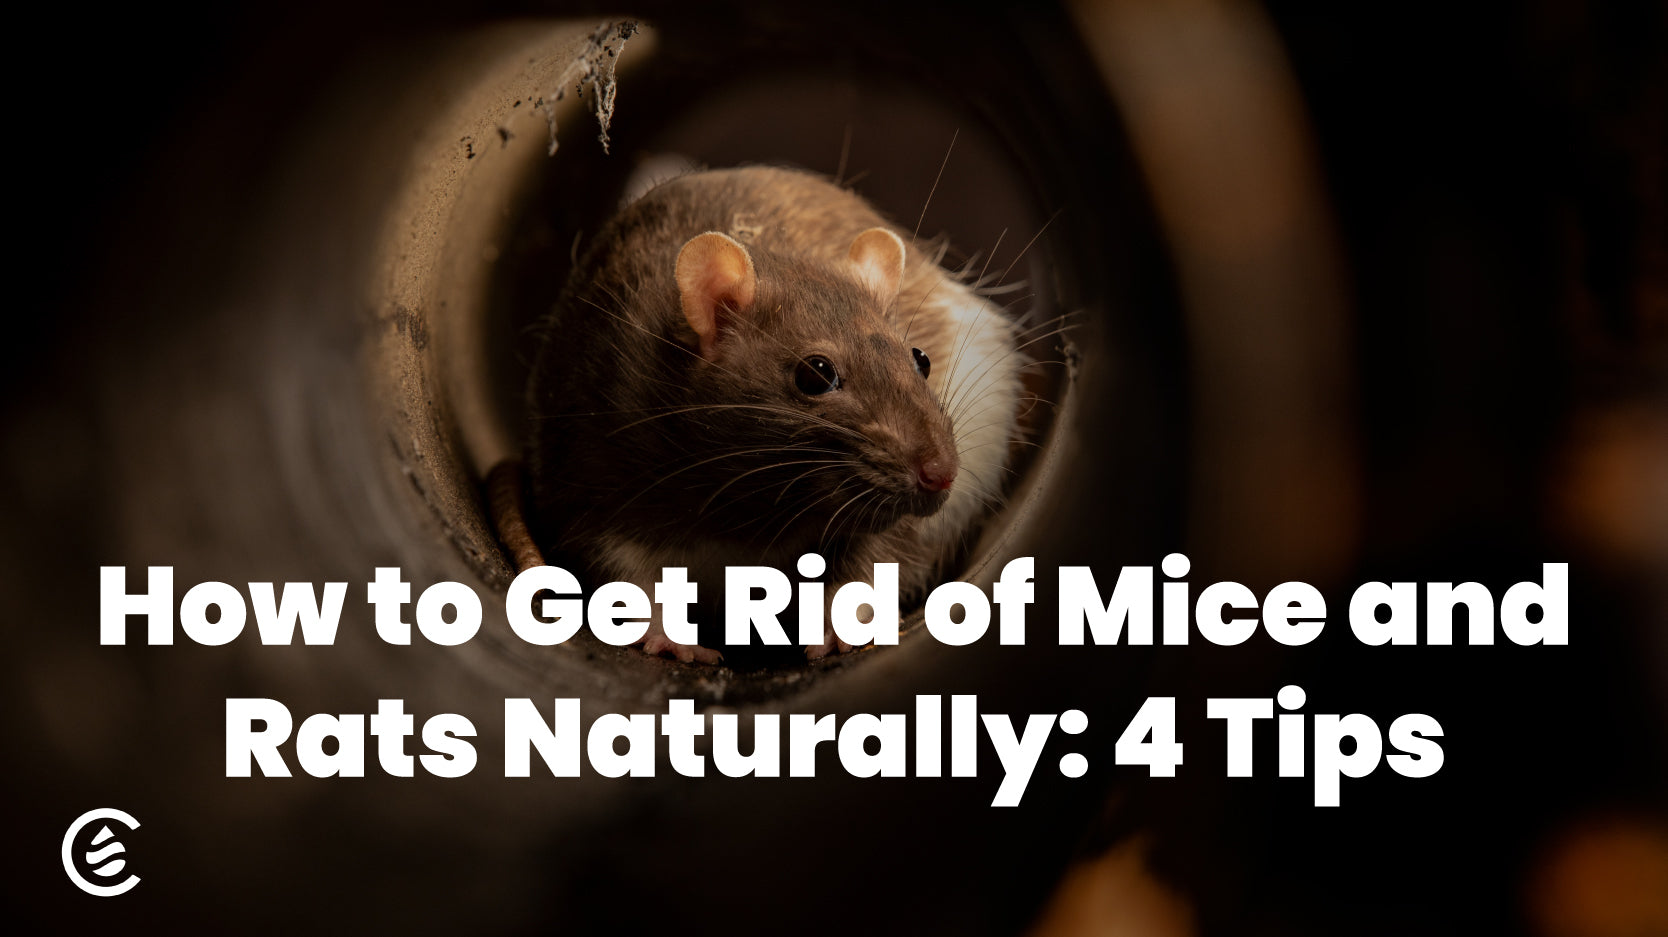 Cedarcide Blog Post Image, Easy, Natural Rodent Control: 4 Steps